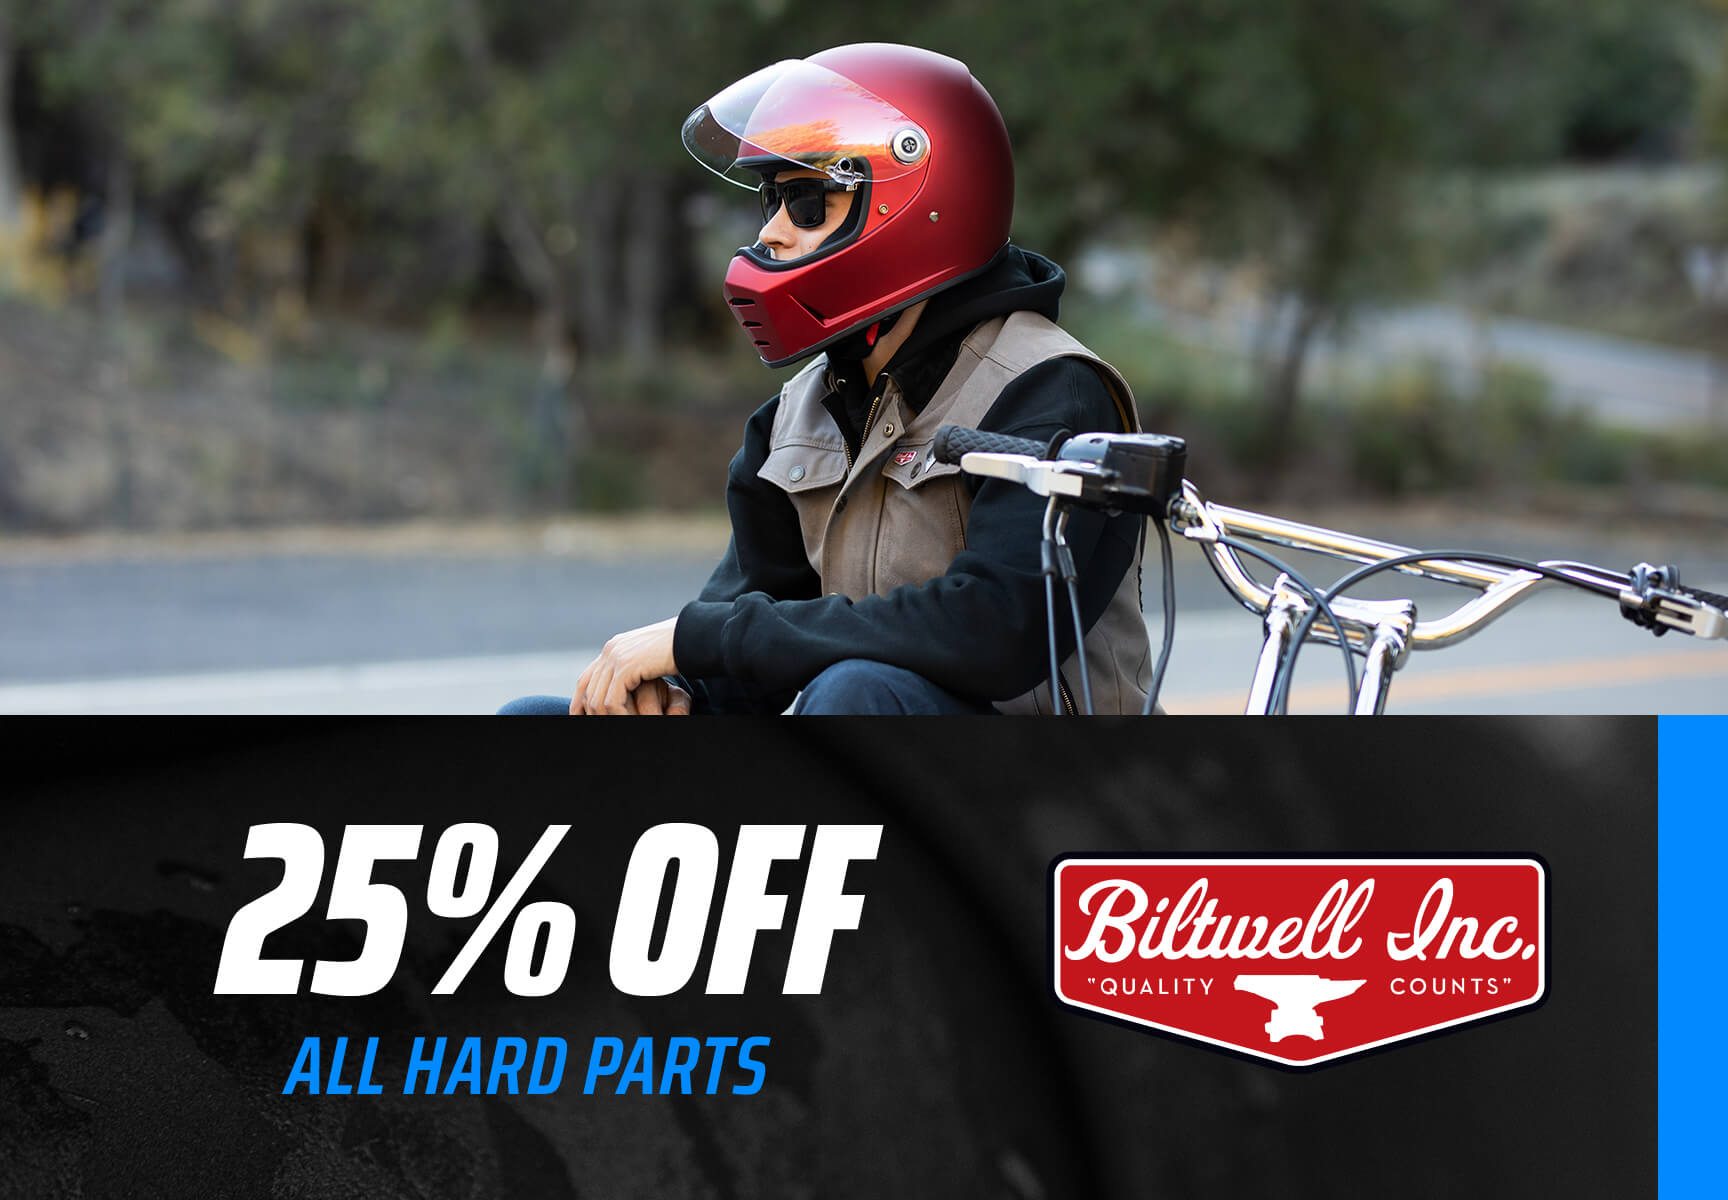 25% Off Biltwell Hard Parts